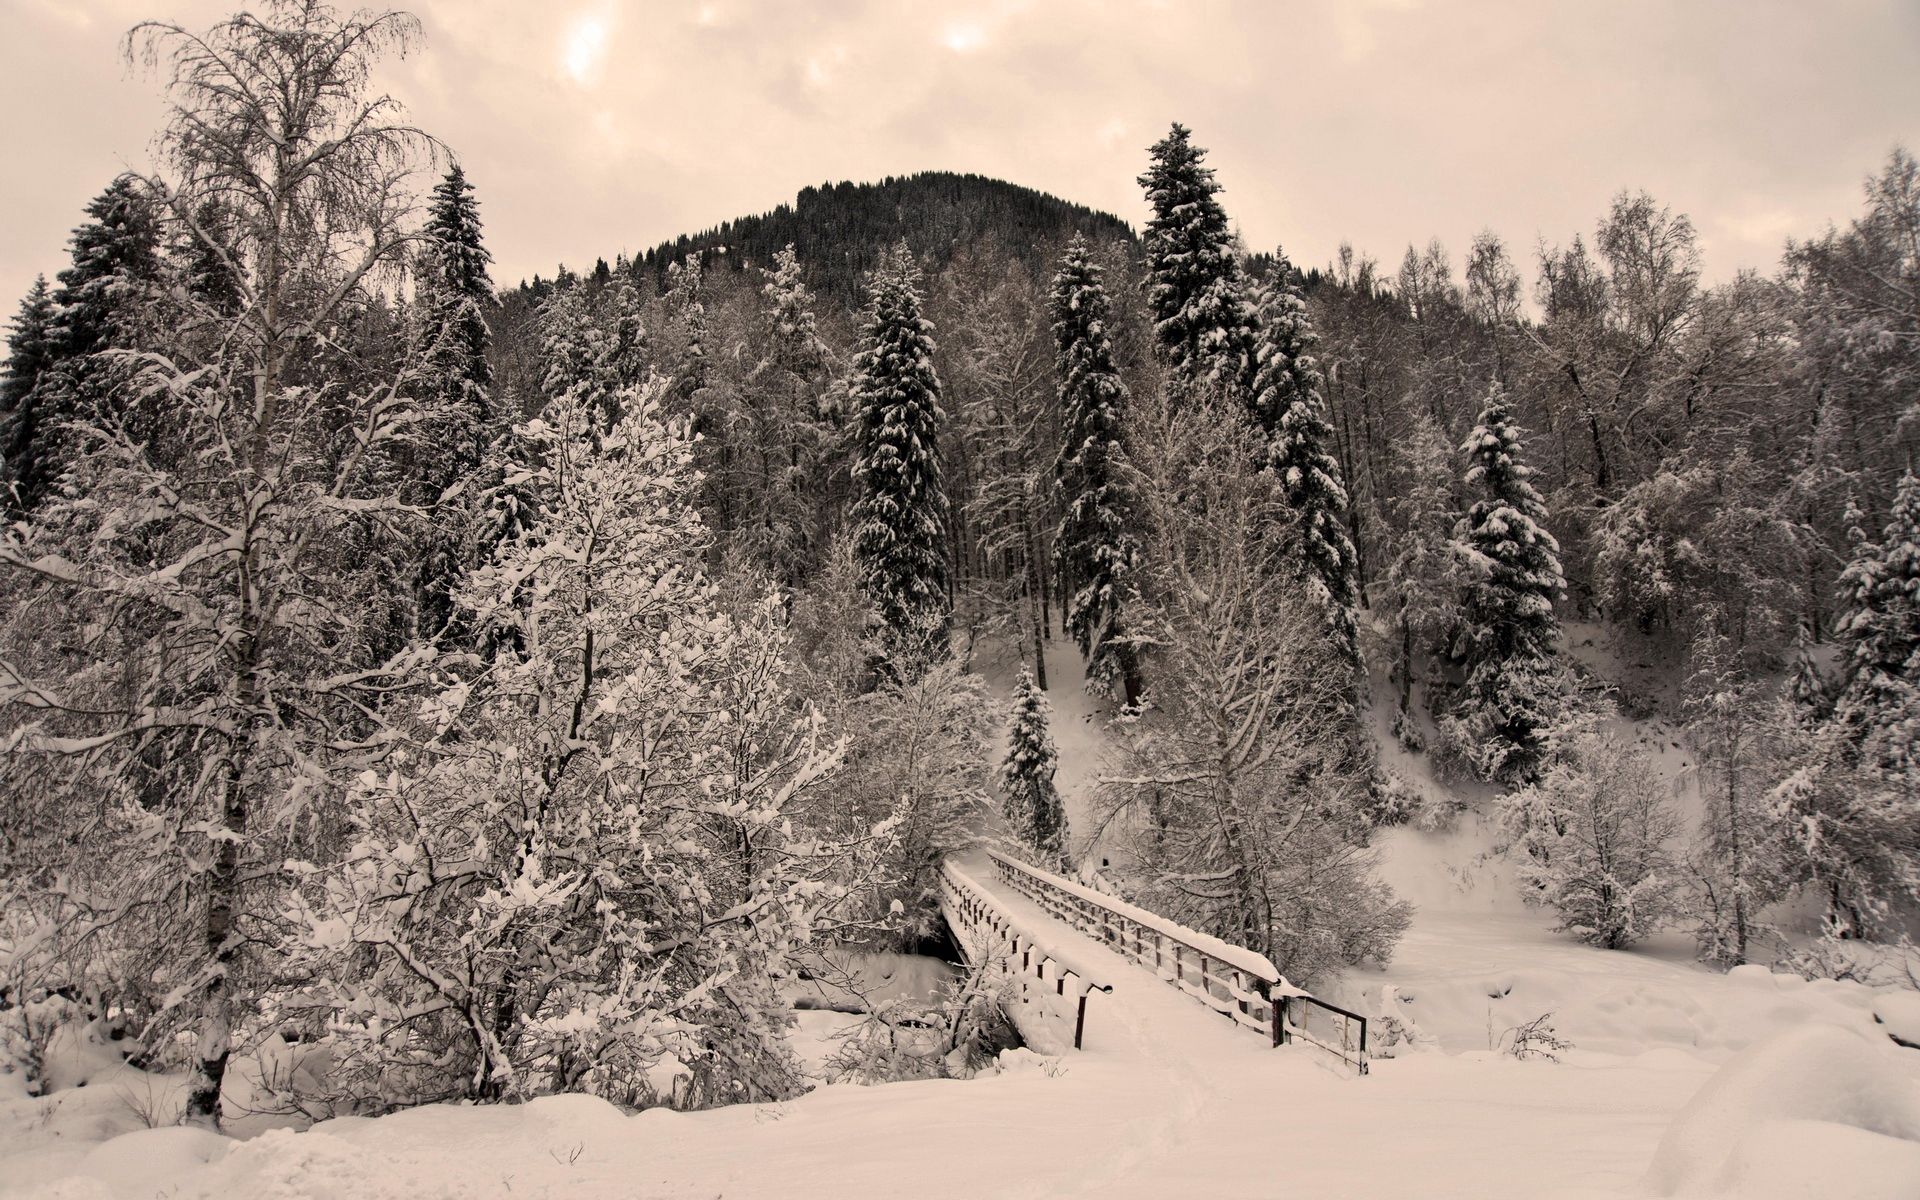 creepy, winter, nature, trees, snow, bridge, frost, hoarfrost, gloomy, severity, heaviness images